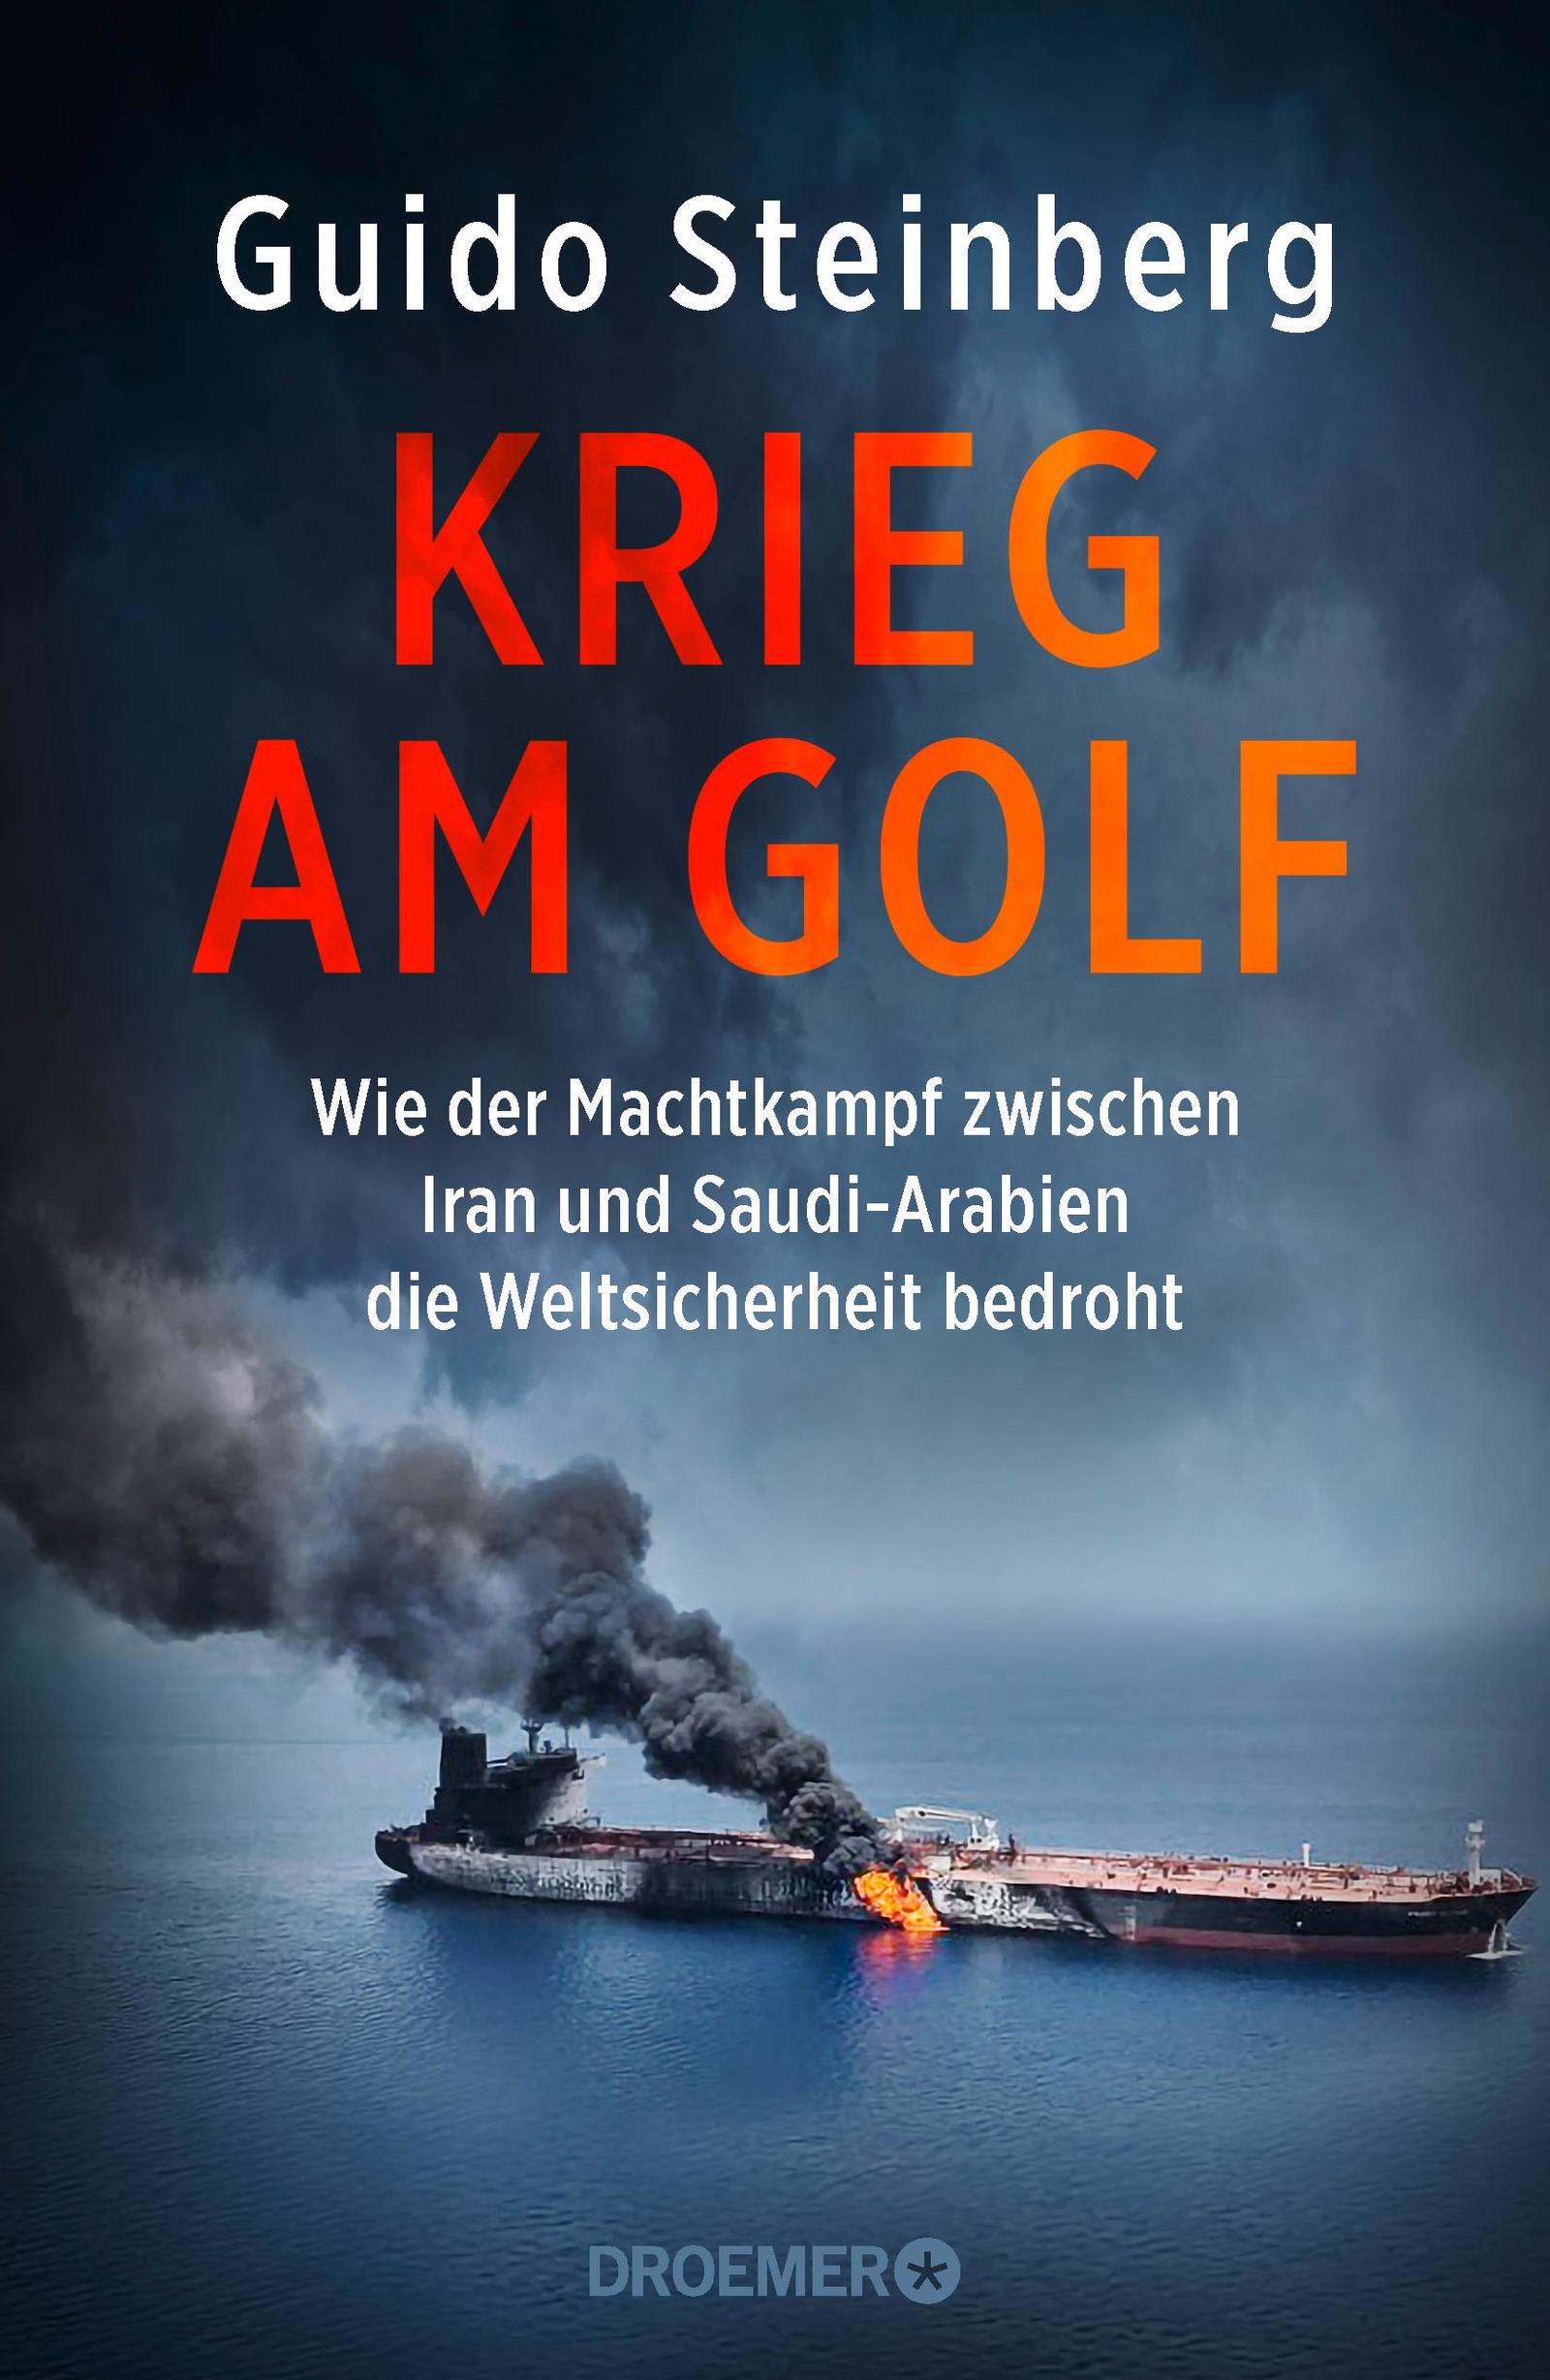 Buchcover Guido Steinberg "Krieg am Golf"; Foto: Droemer Verlag